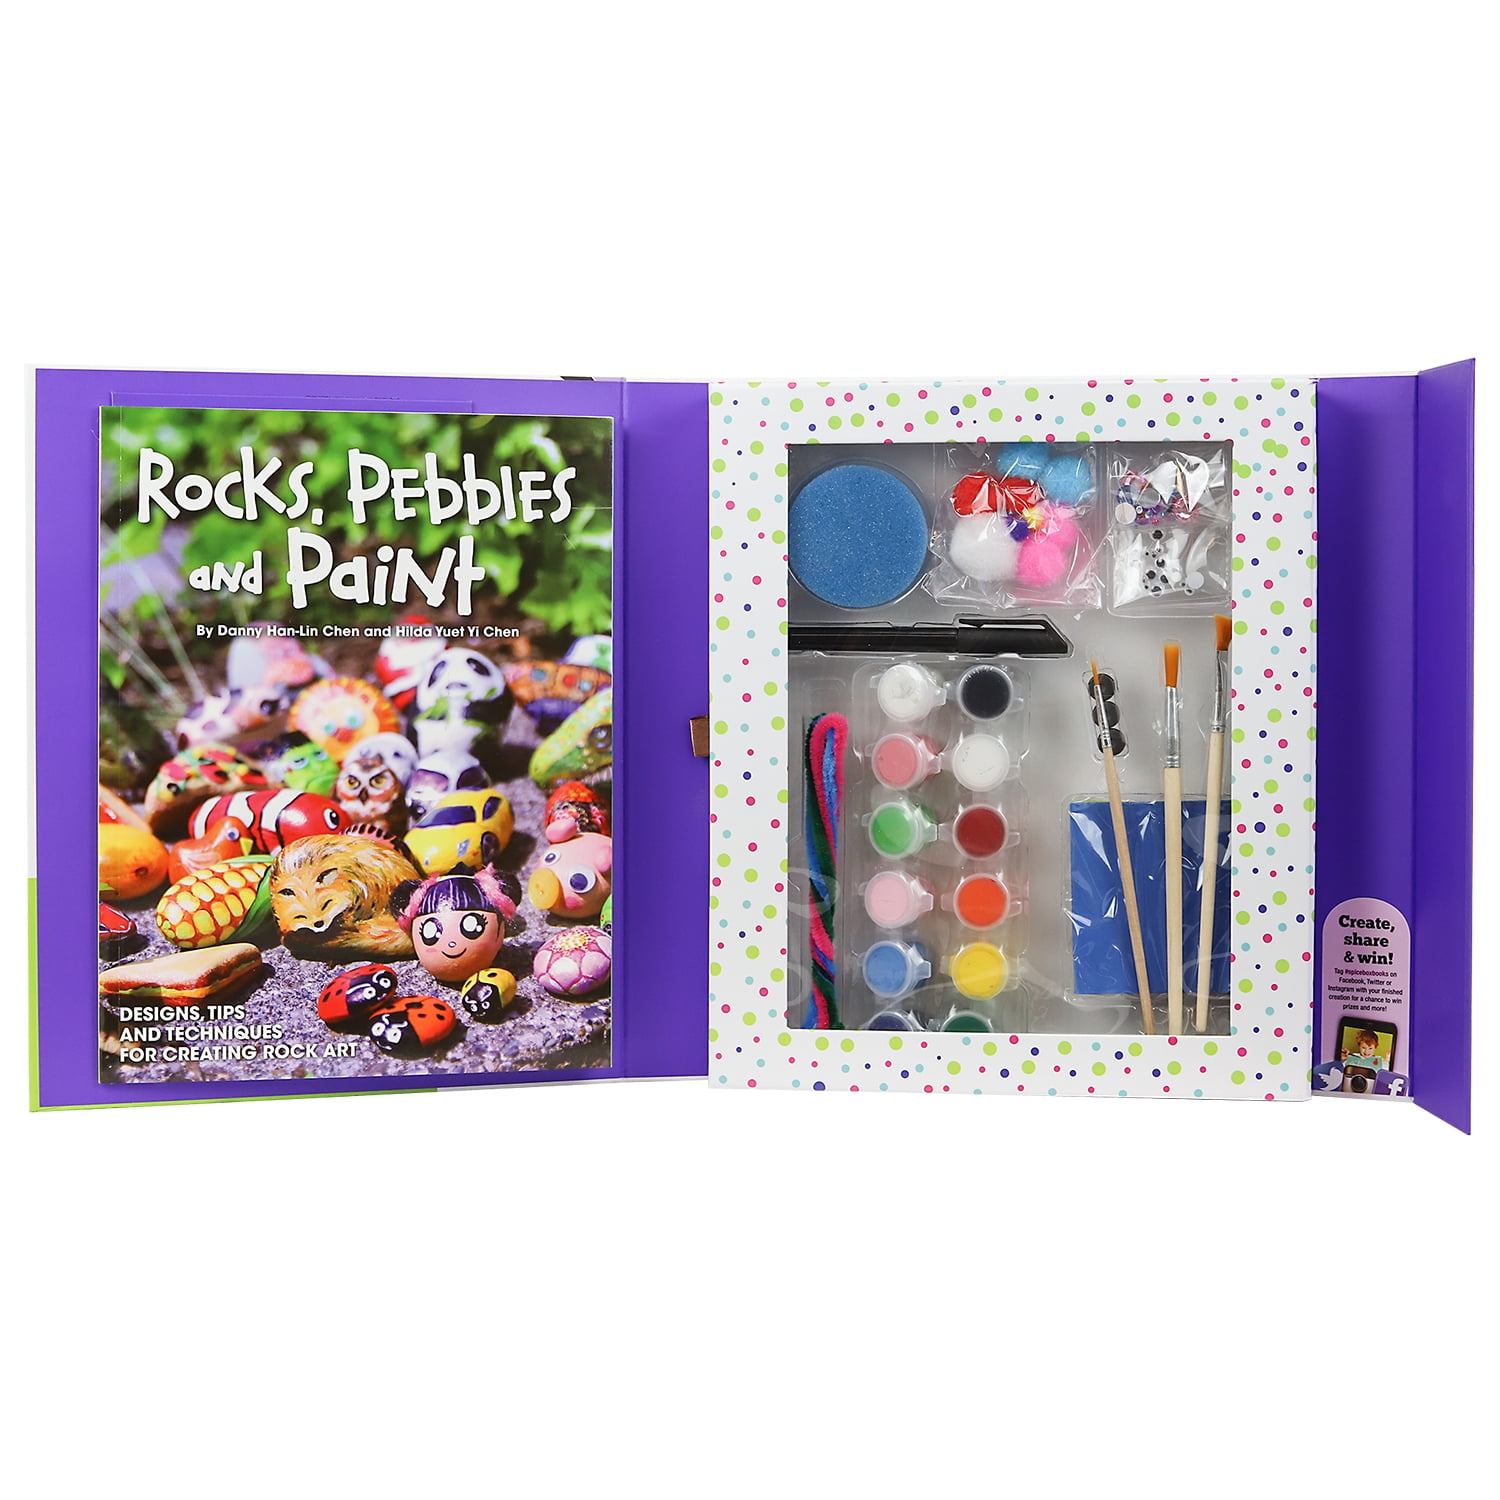 SpiceBox Children's Activity Kits Make & Play Clay Play Age Range 8+